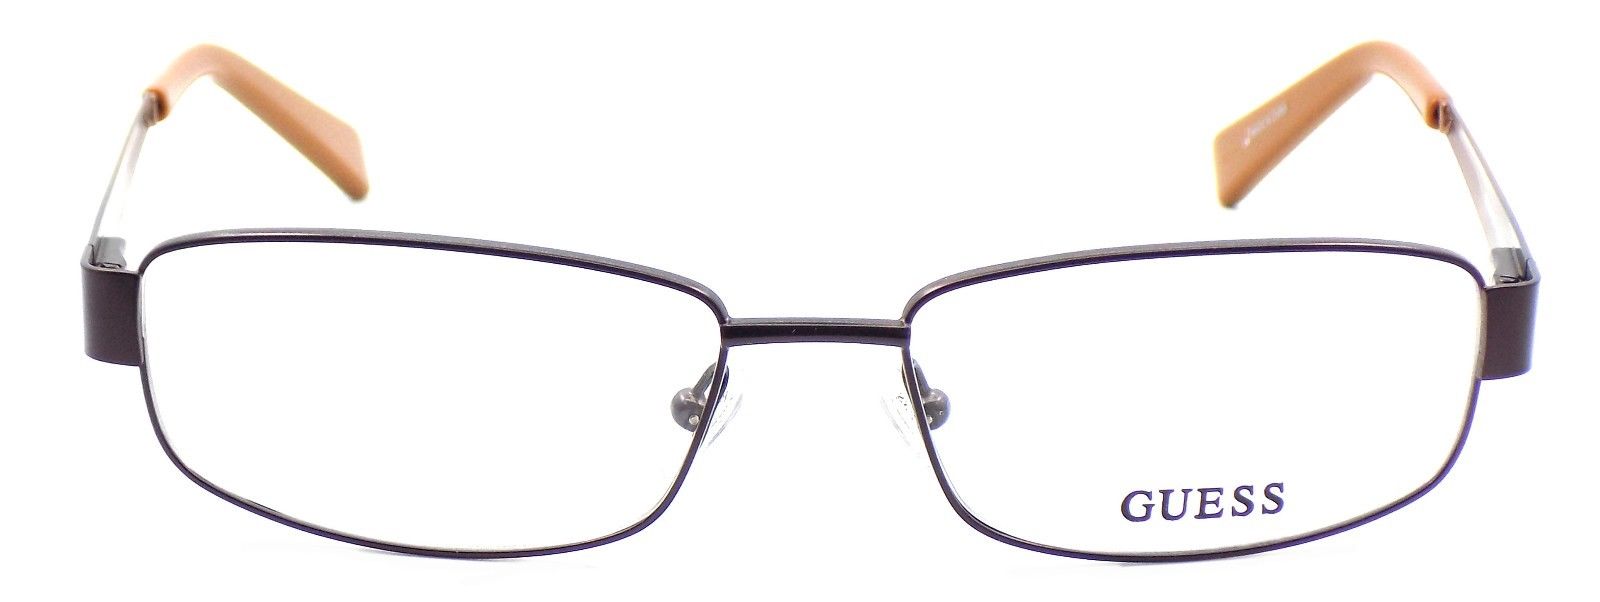 2-GUESS GU1769 BRN Men's Eyeglasses Frames 54-16-140 Brown + CASE-715583660892-IKSpecs